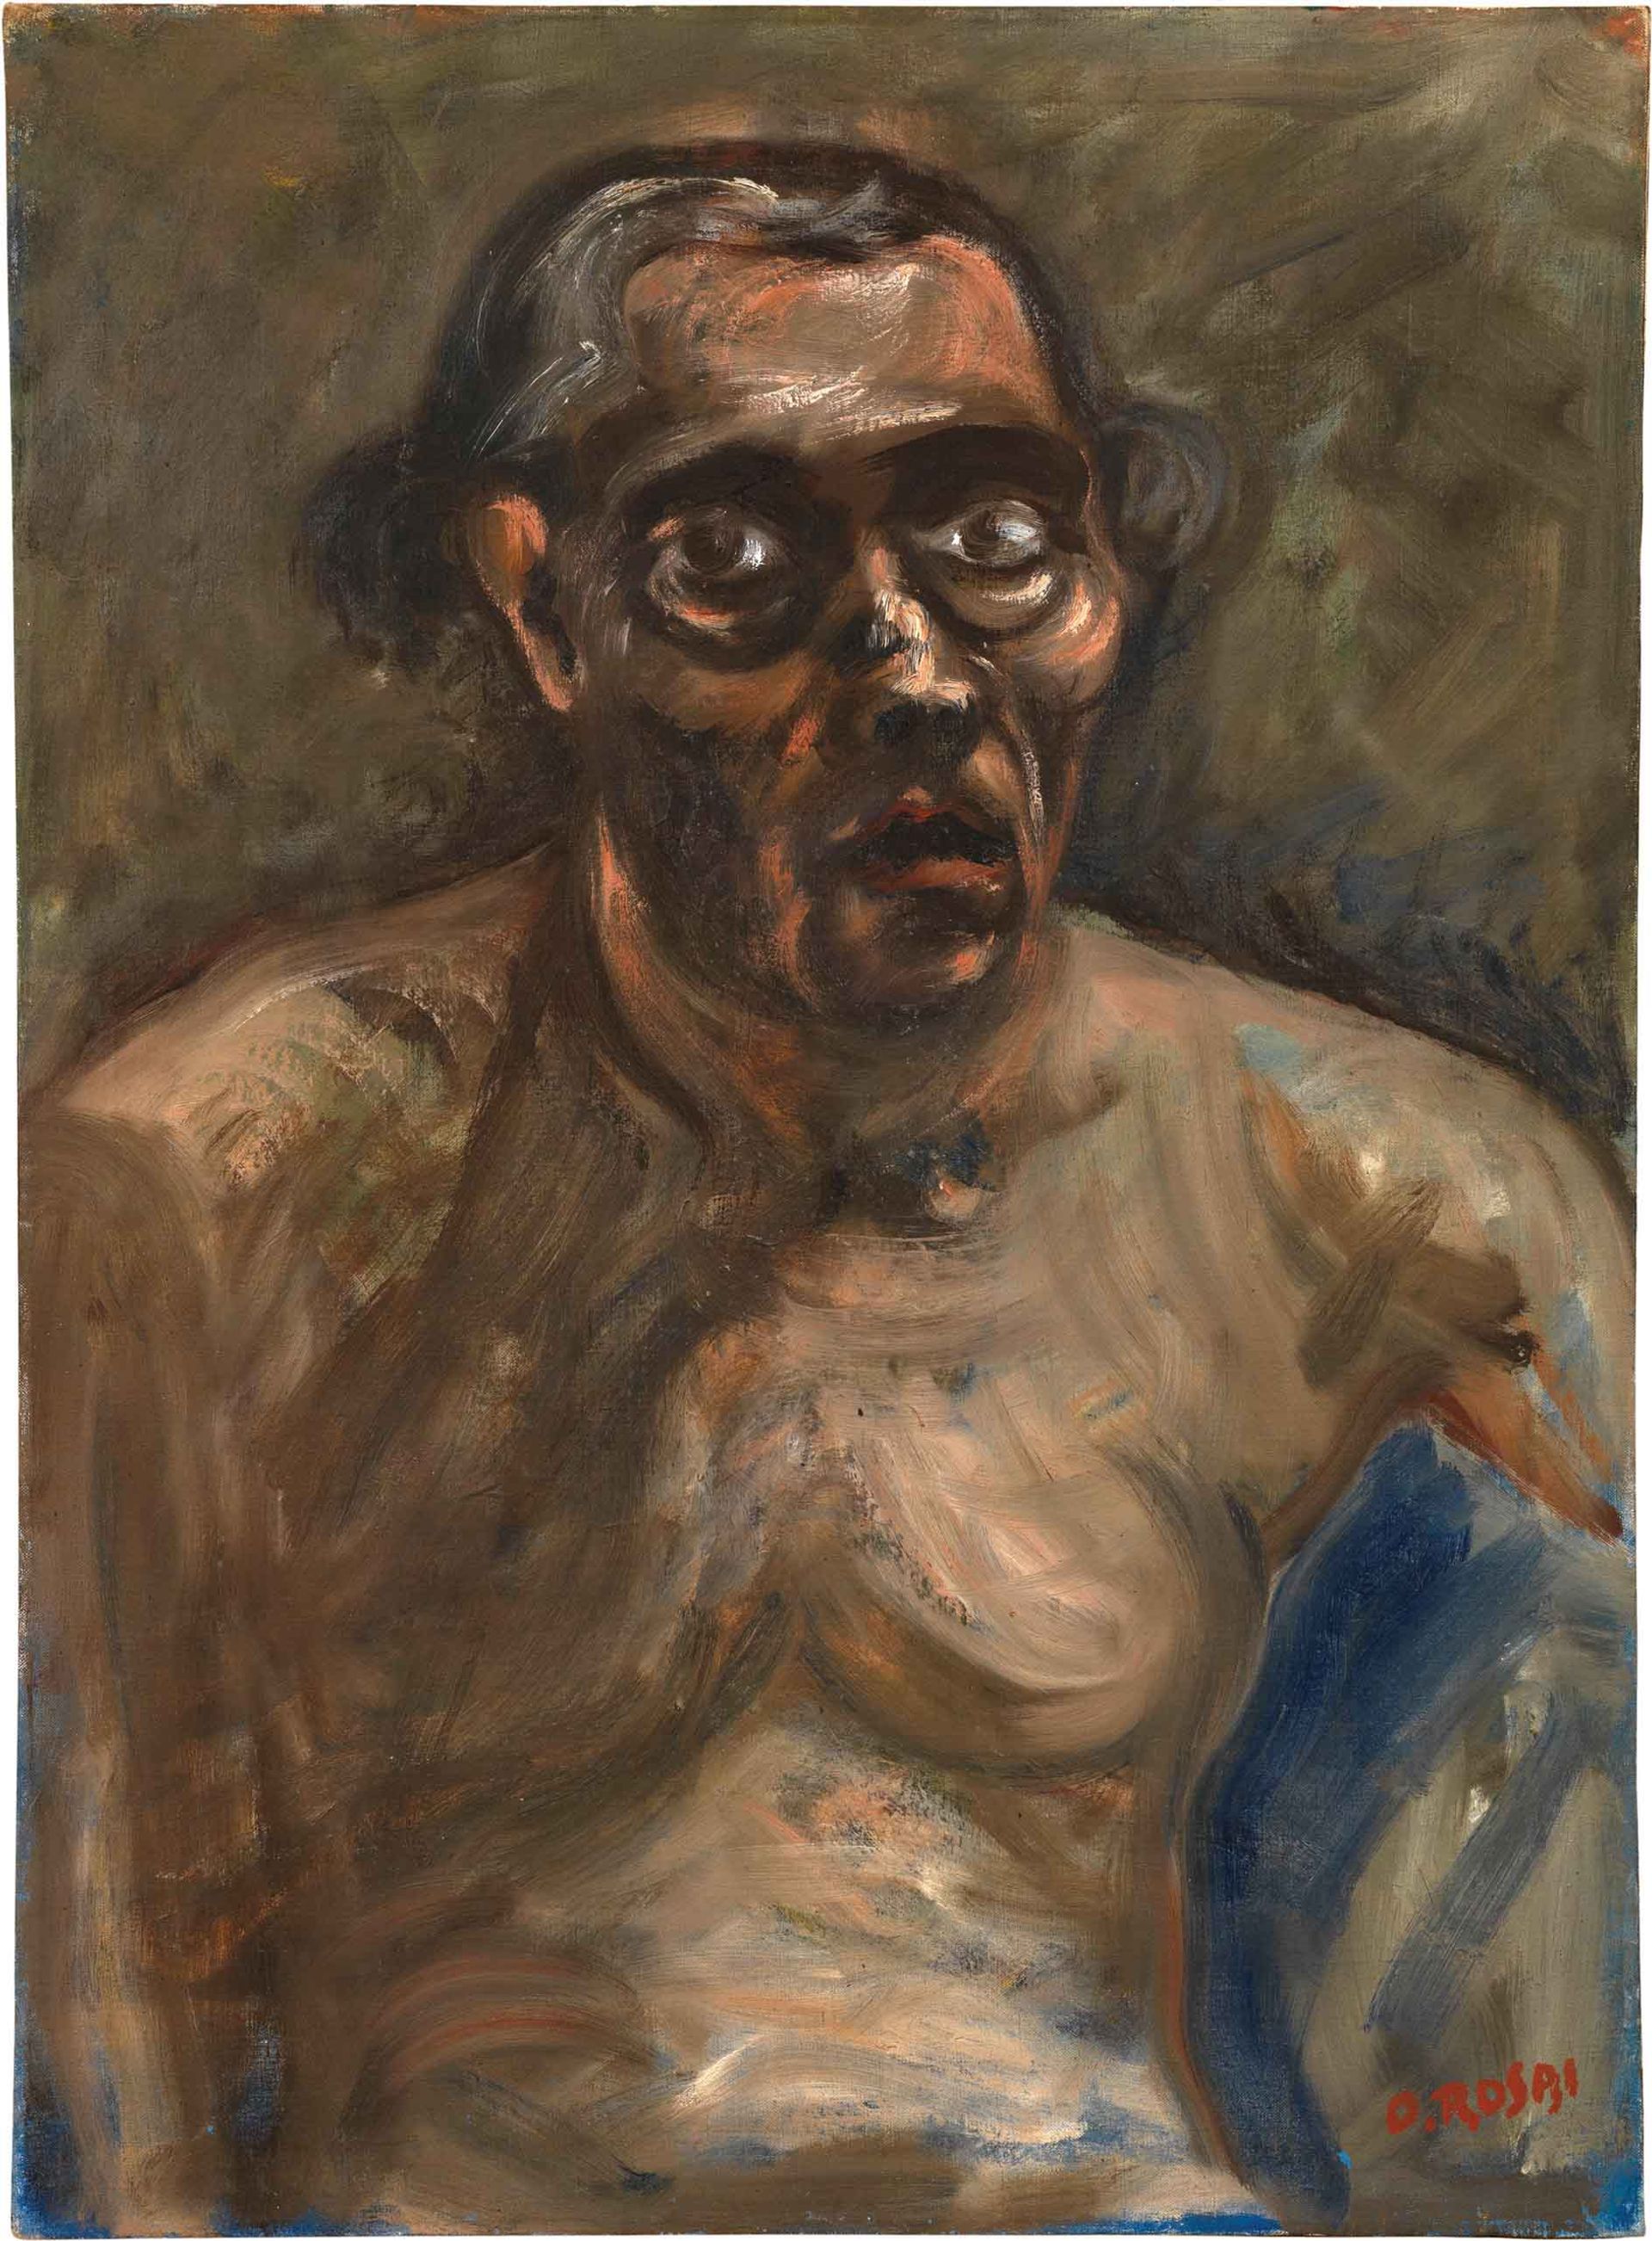 Ottone Rosai's self-portrait (around 1942)

Courtesy of Daniel Blau